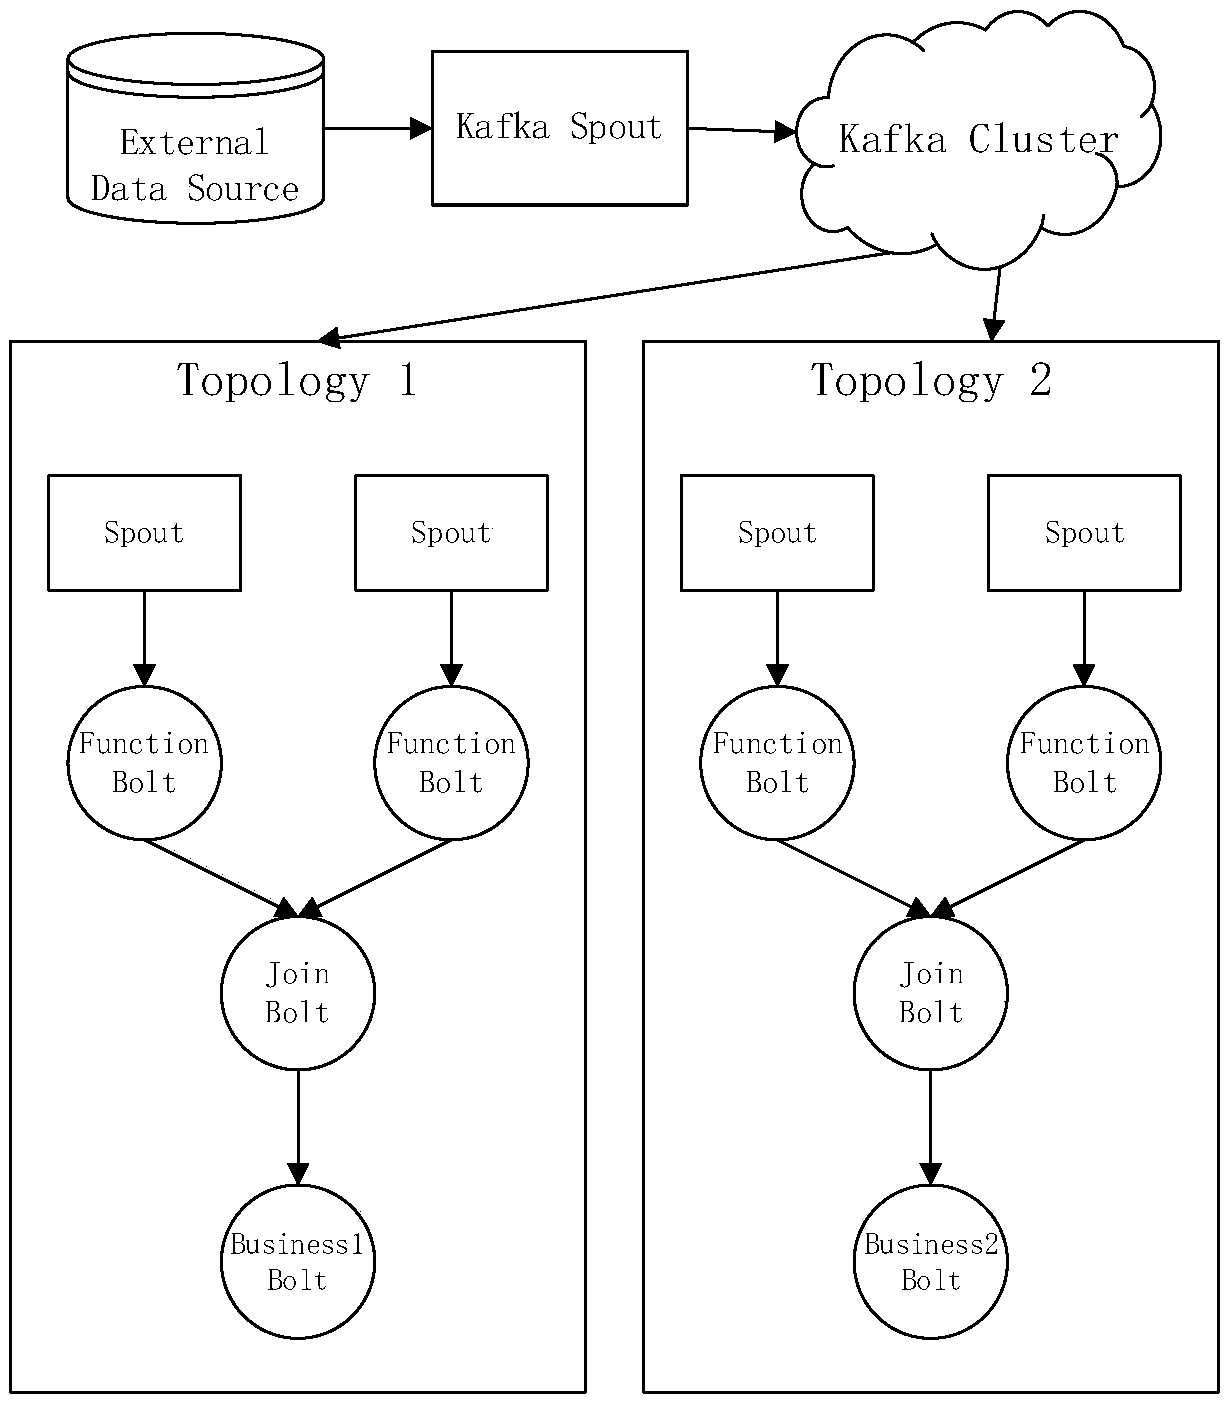 A Storm-based industrial signaling data stream type computing framework